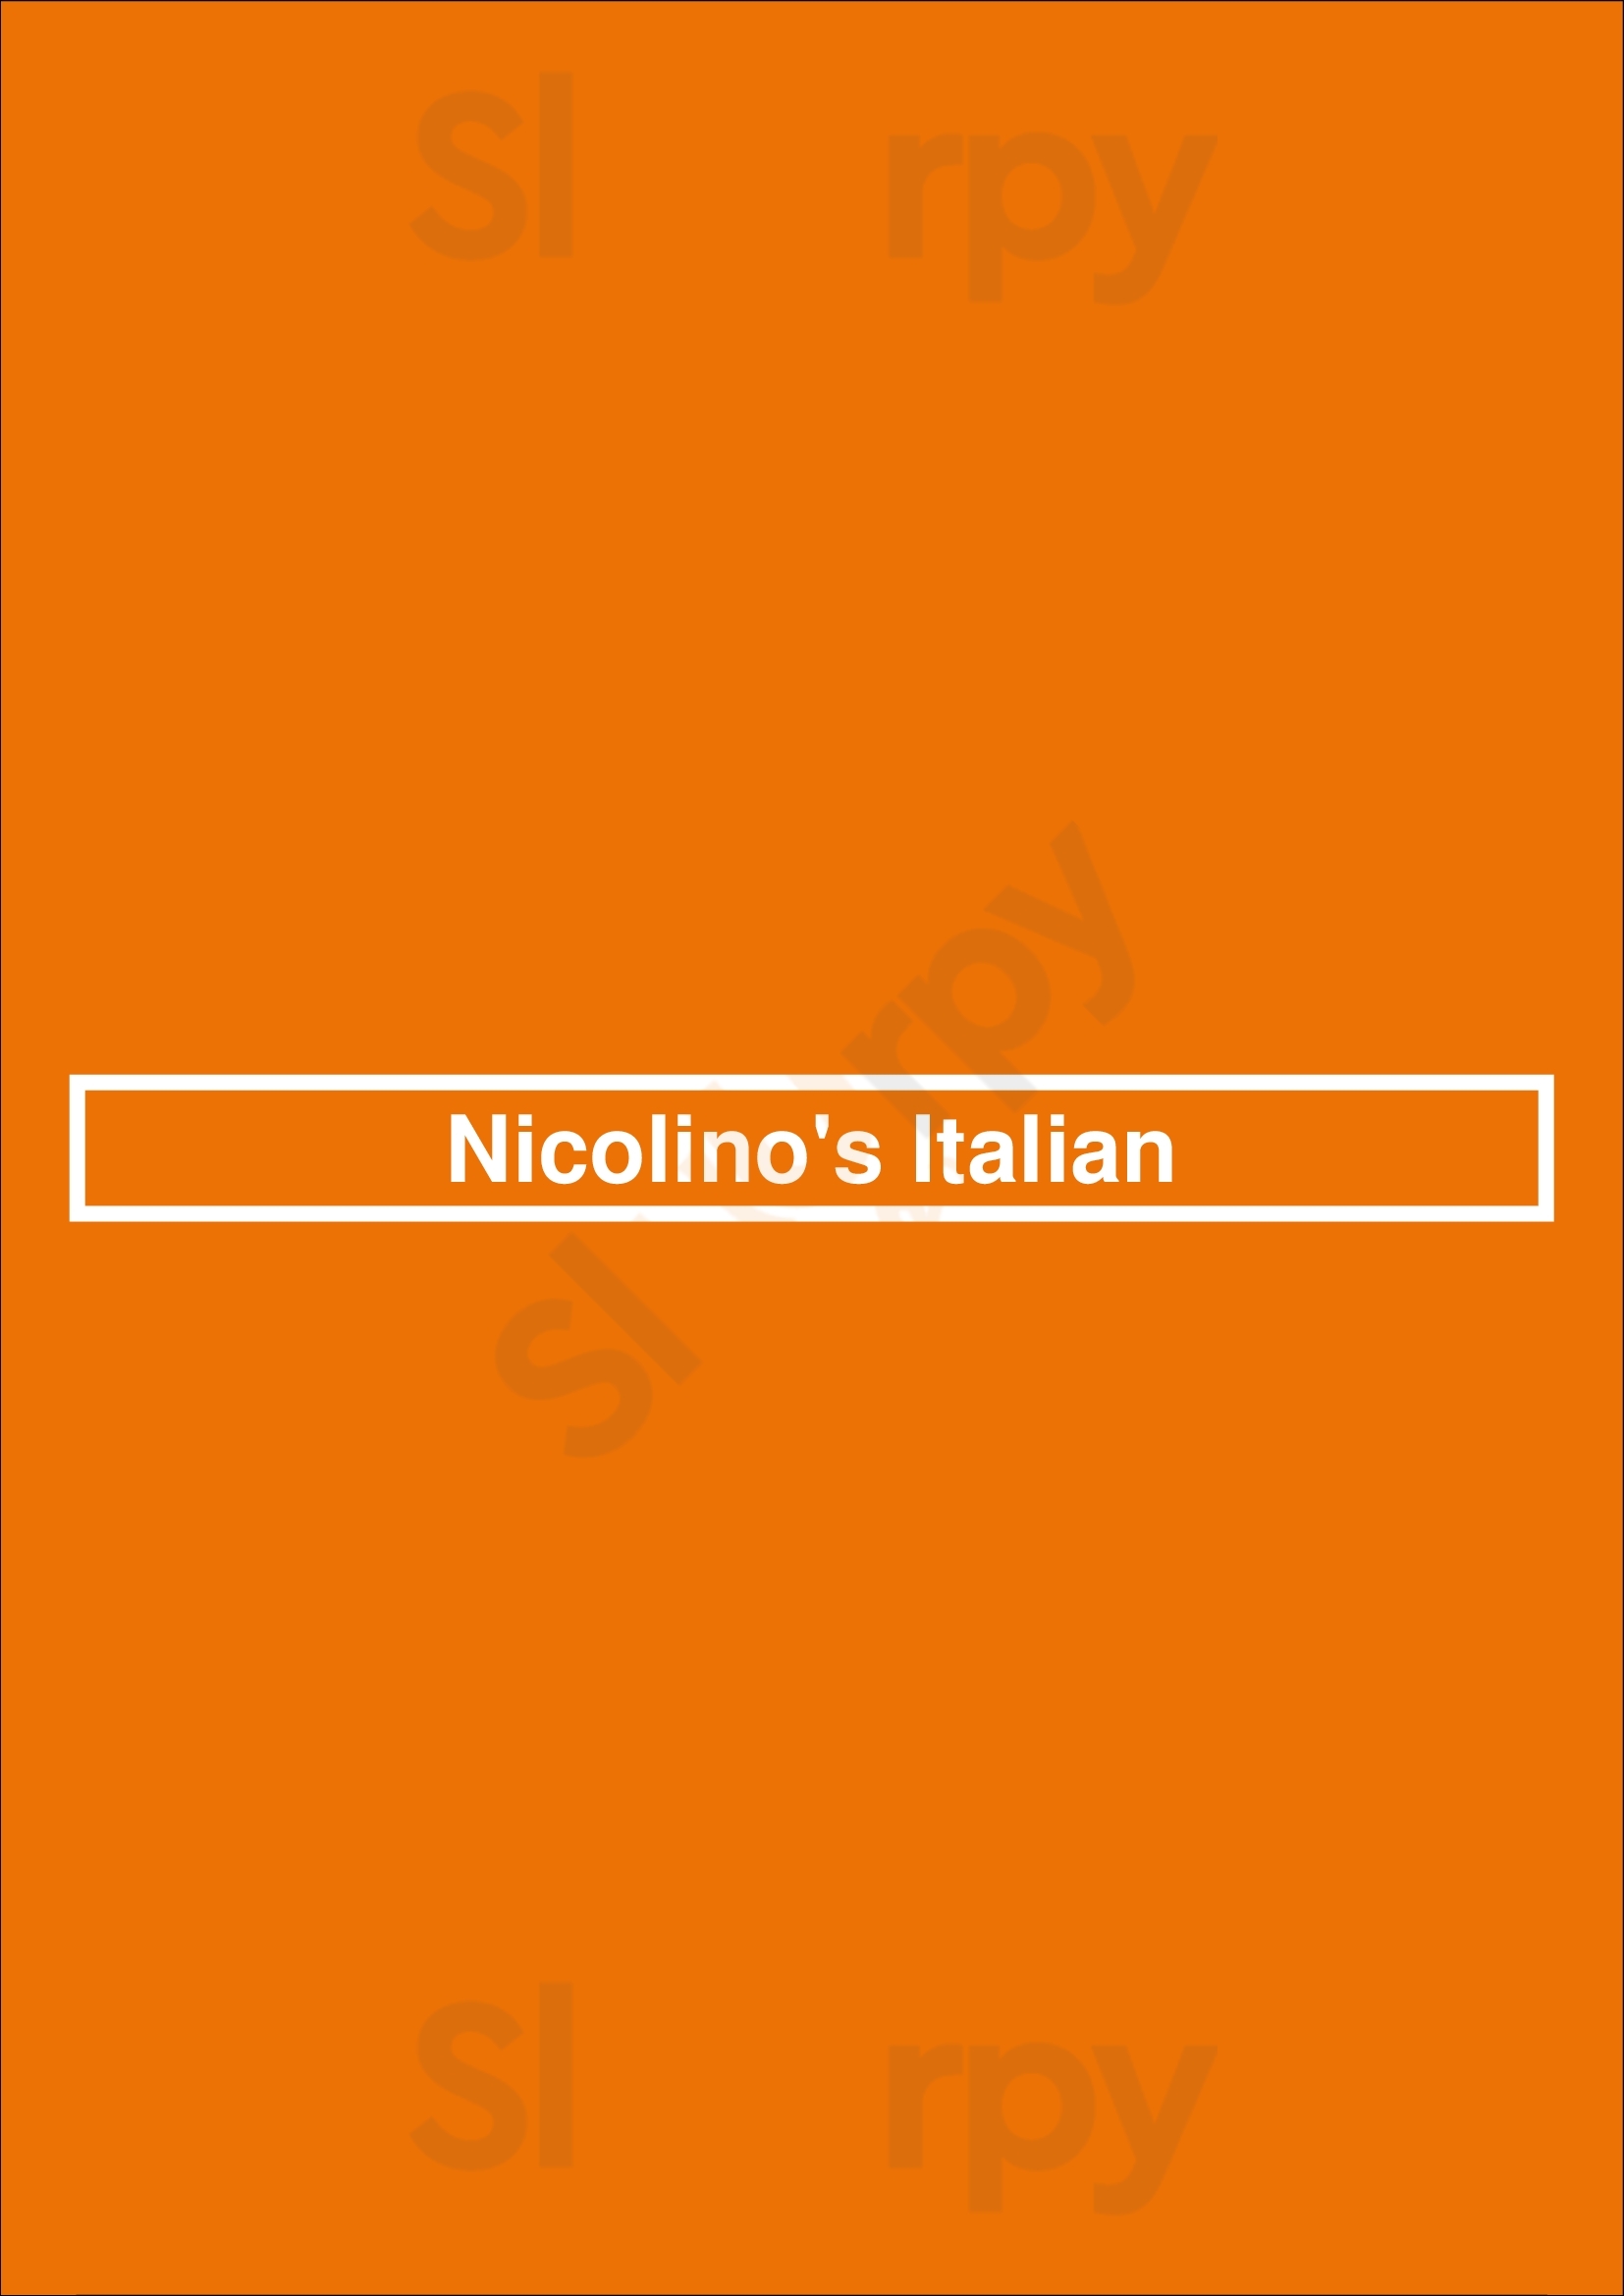 Nicolino's Italian Indianapolis Menu - 1